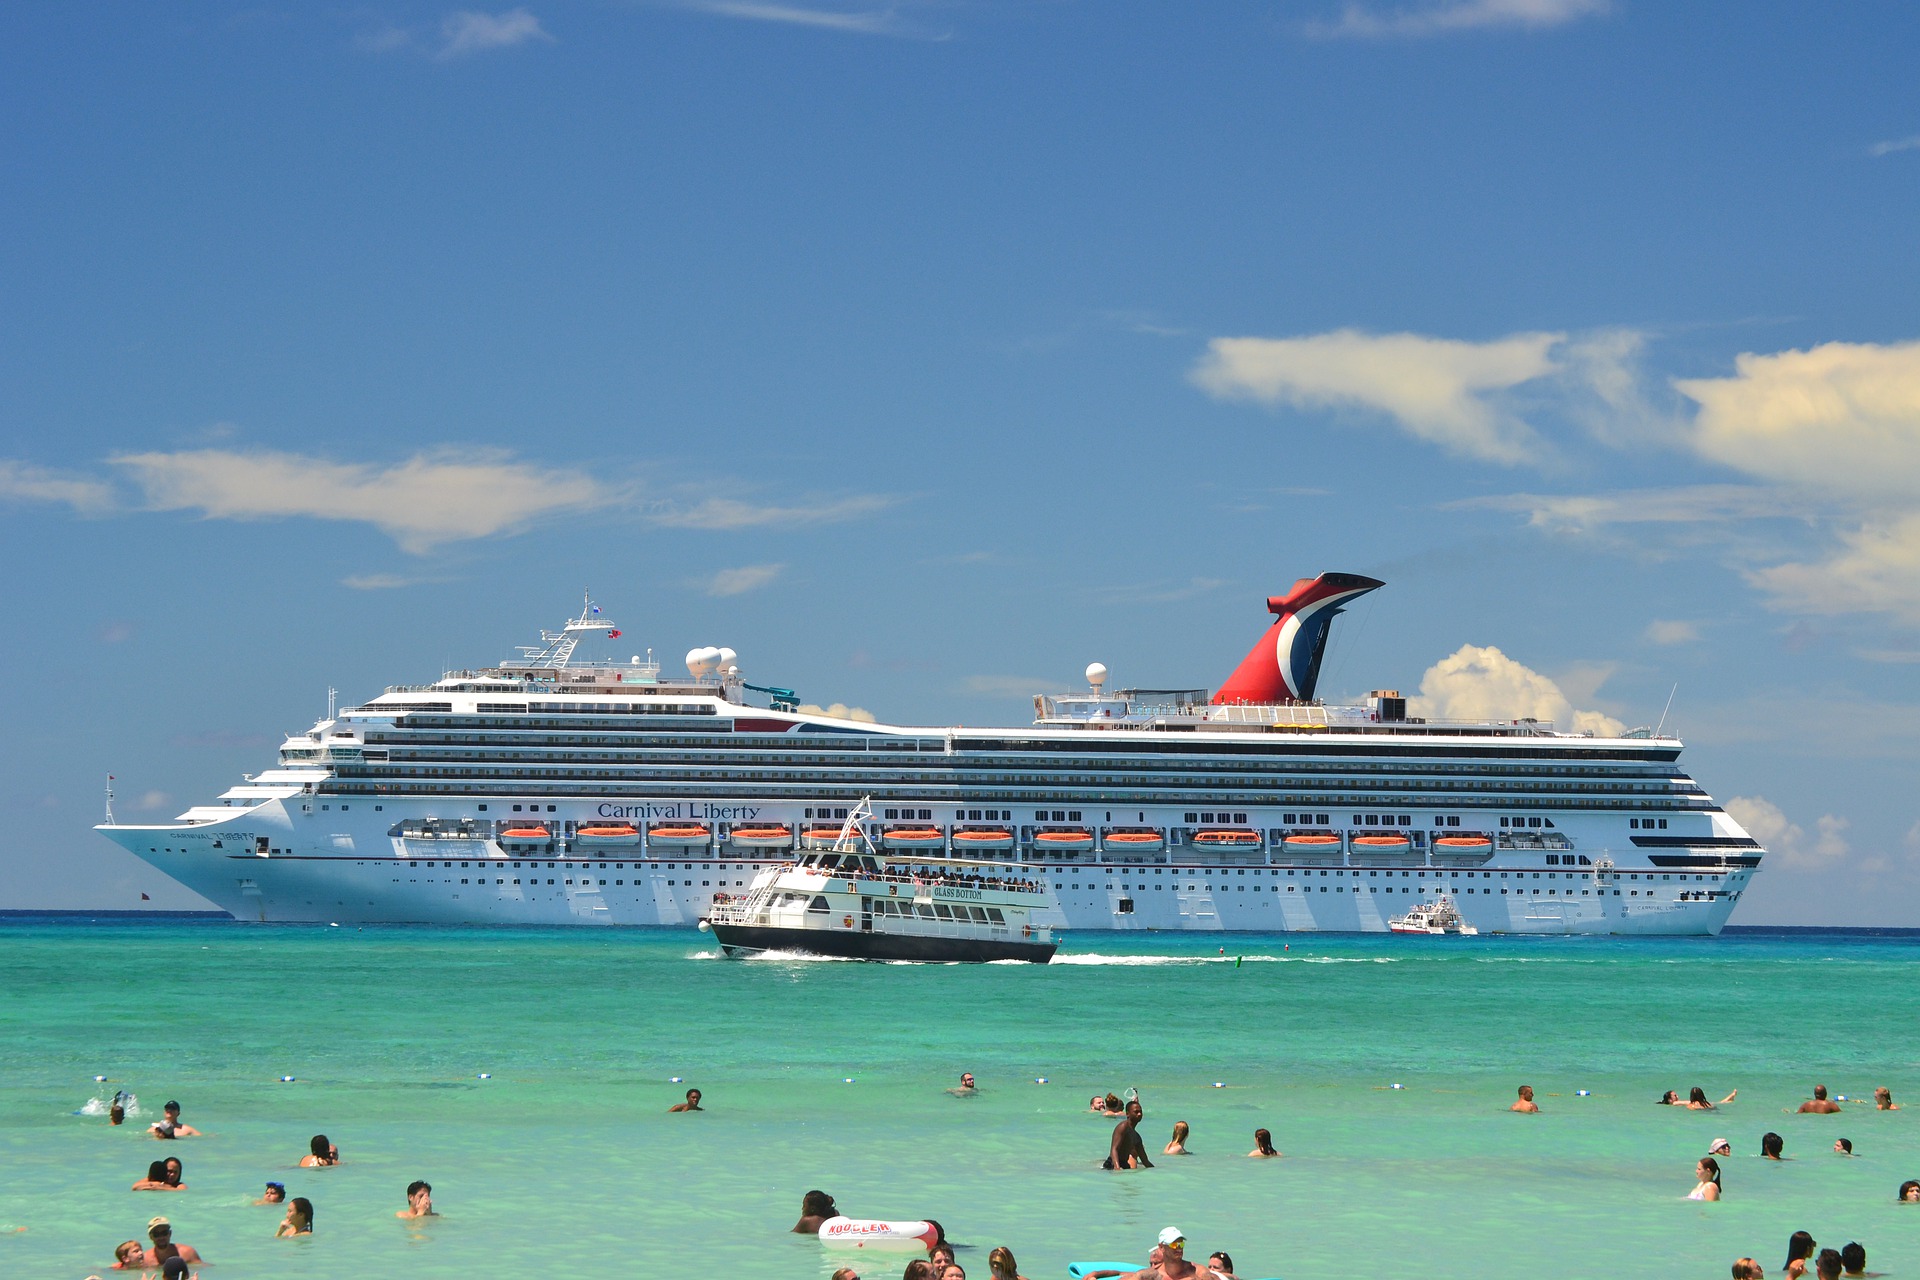 Carnival Liberty cruise ship off the coast of a beach (source: asram02, Pixabay)